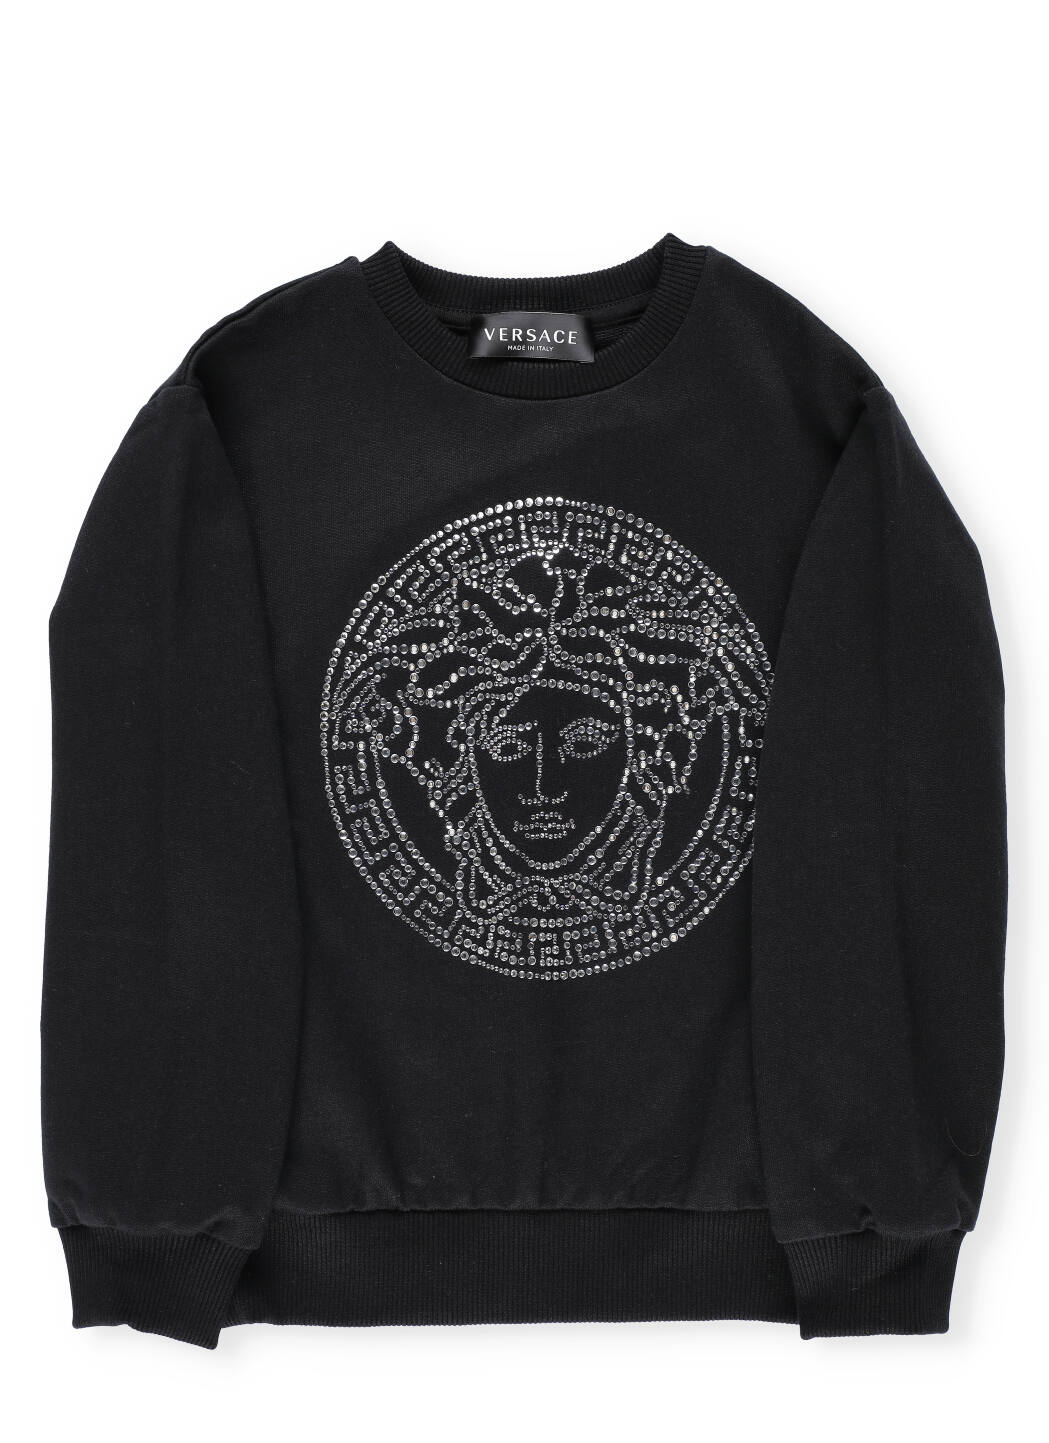 Versace Medusa Logo Sweatshirt